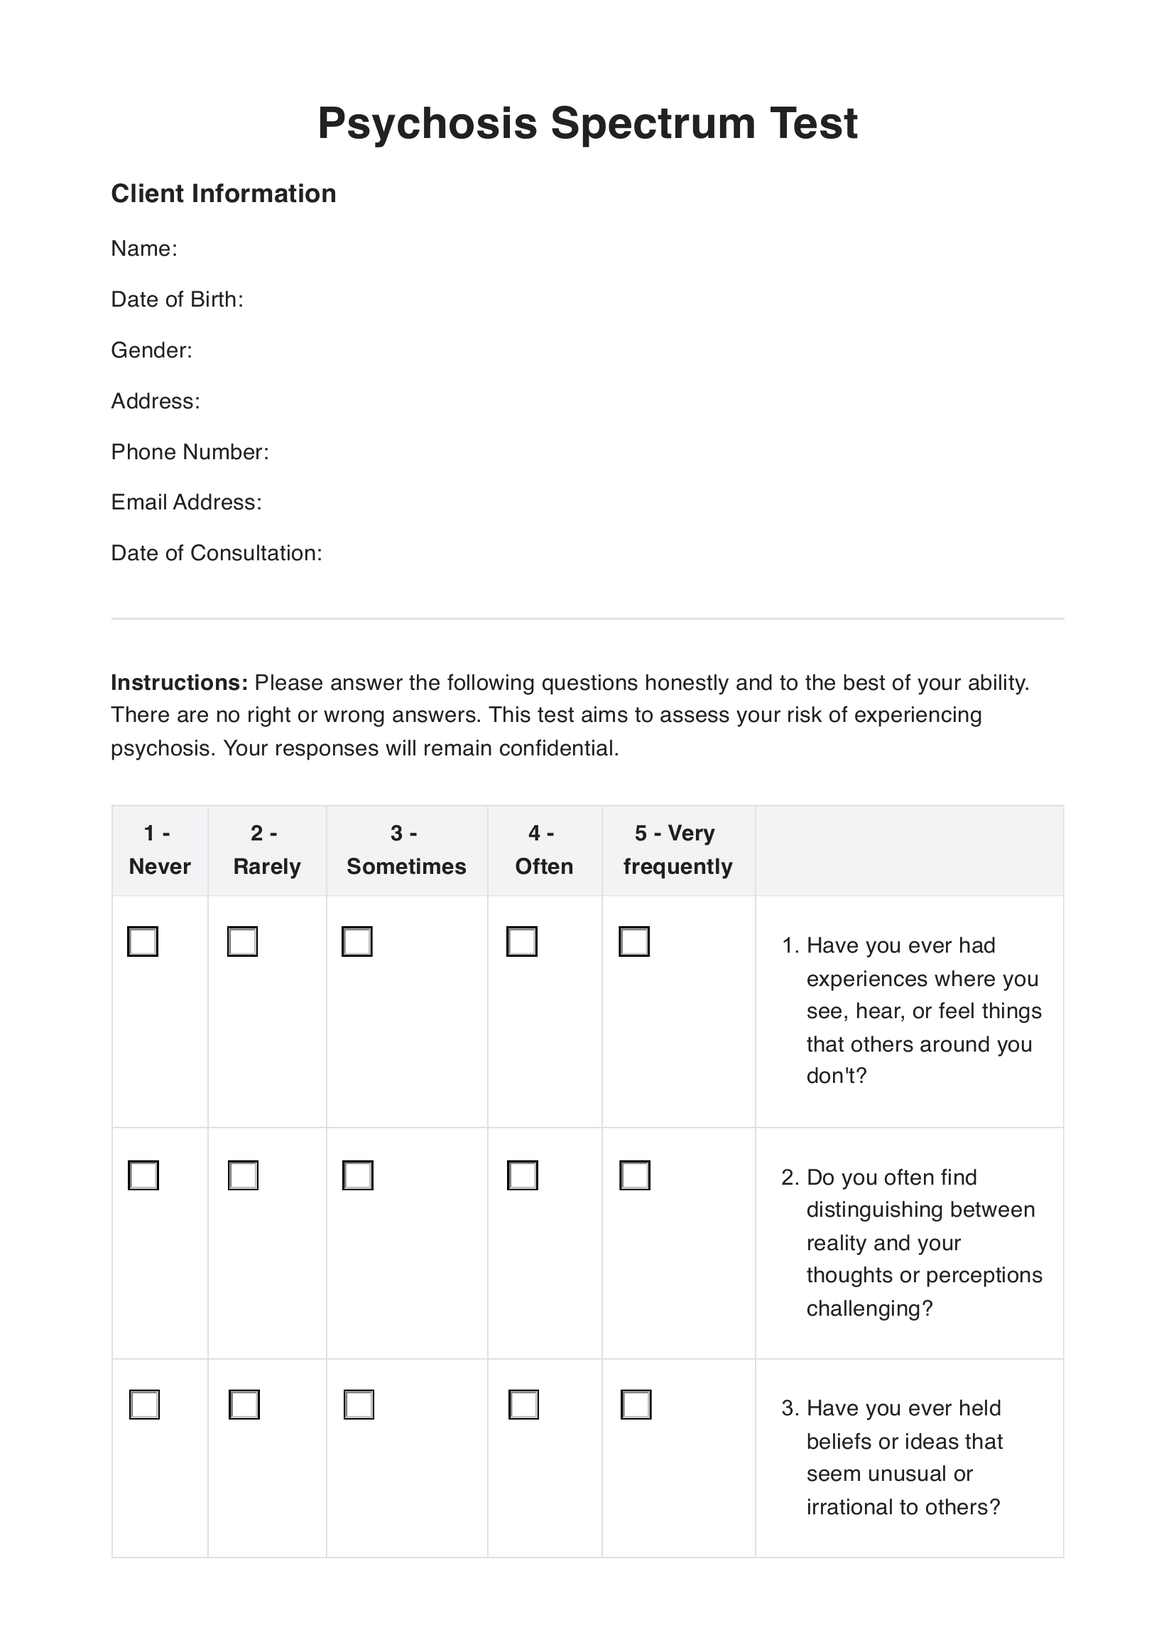 Psychosis Spectrum Test PDF Example